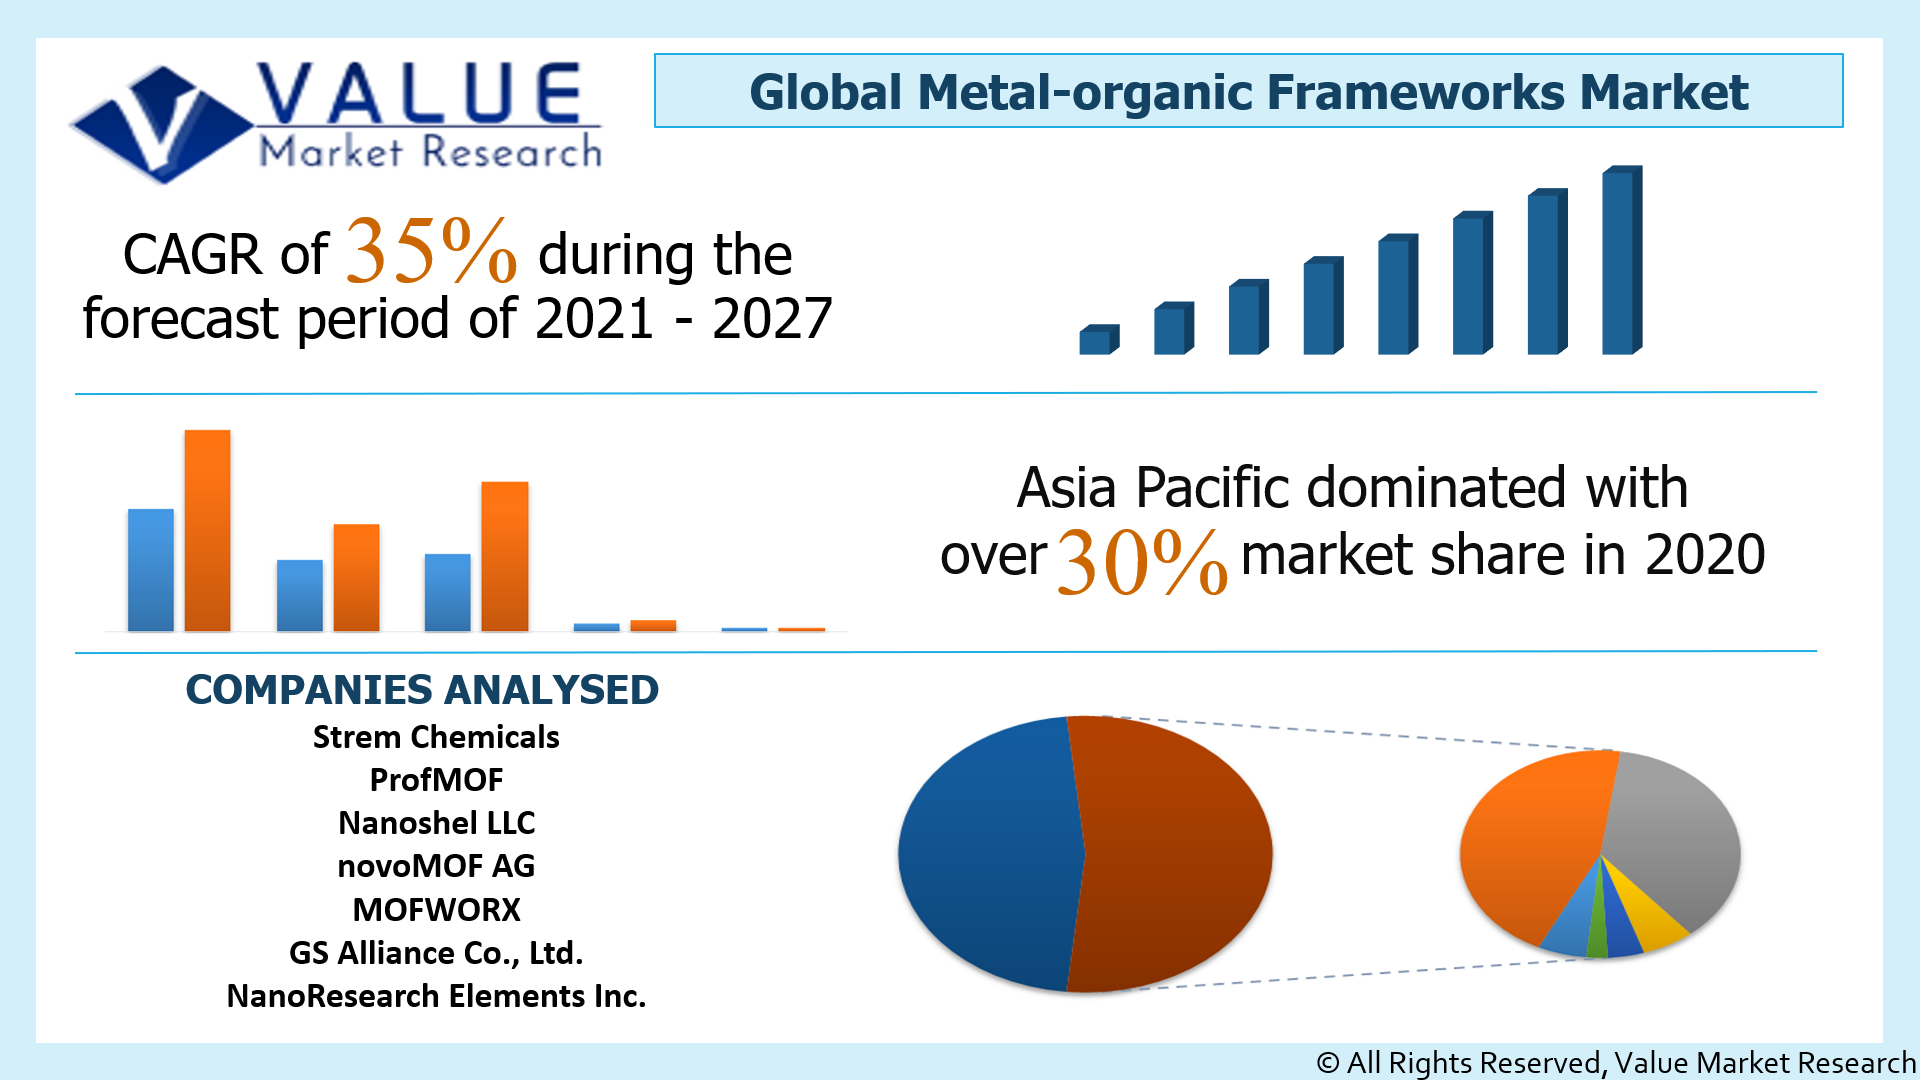 Global Metal-organic Frameworks Market Share